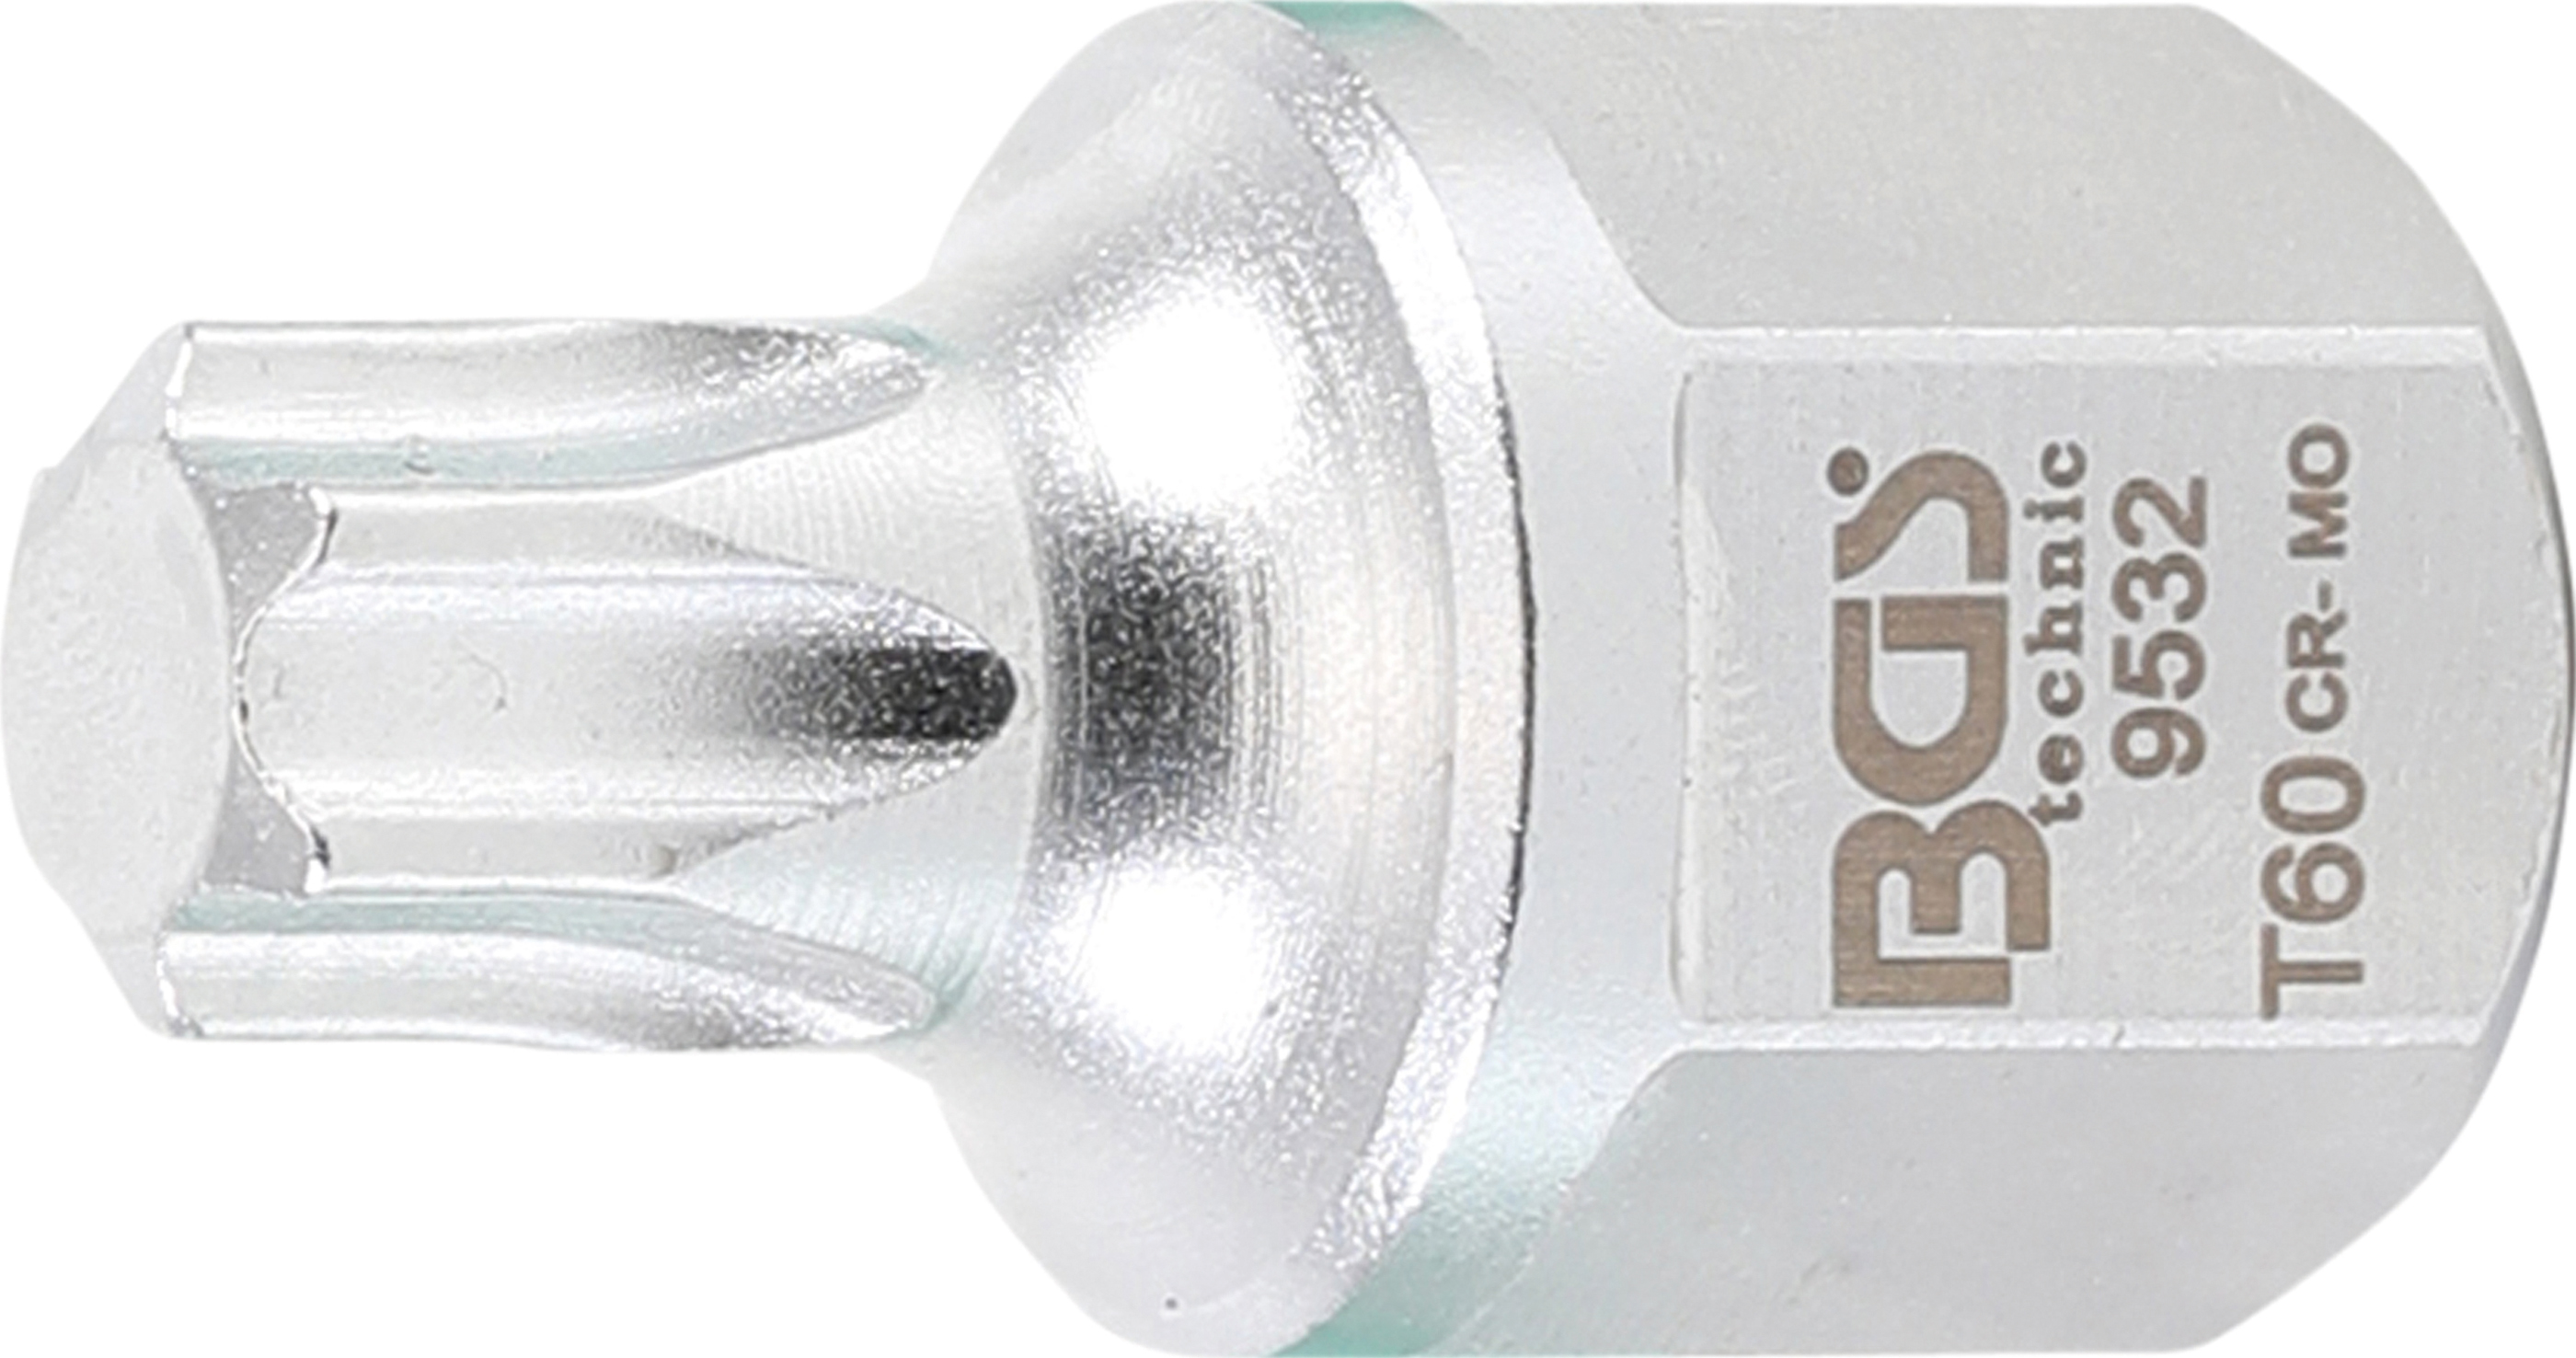 BGS 9532 Bit Torx T60 pentru slabit curele de accesorii poly-v VAG 6 cylinder TDI common rail, antrenare 1/2" / Hexagon exterior 22 mm